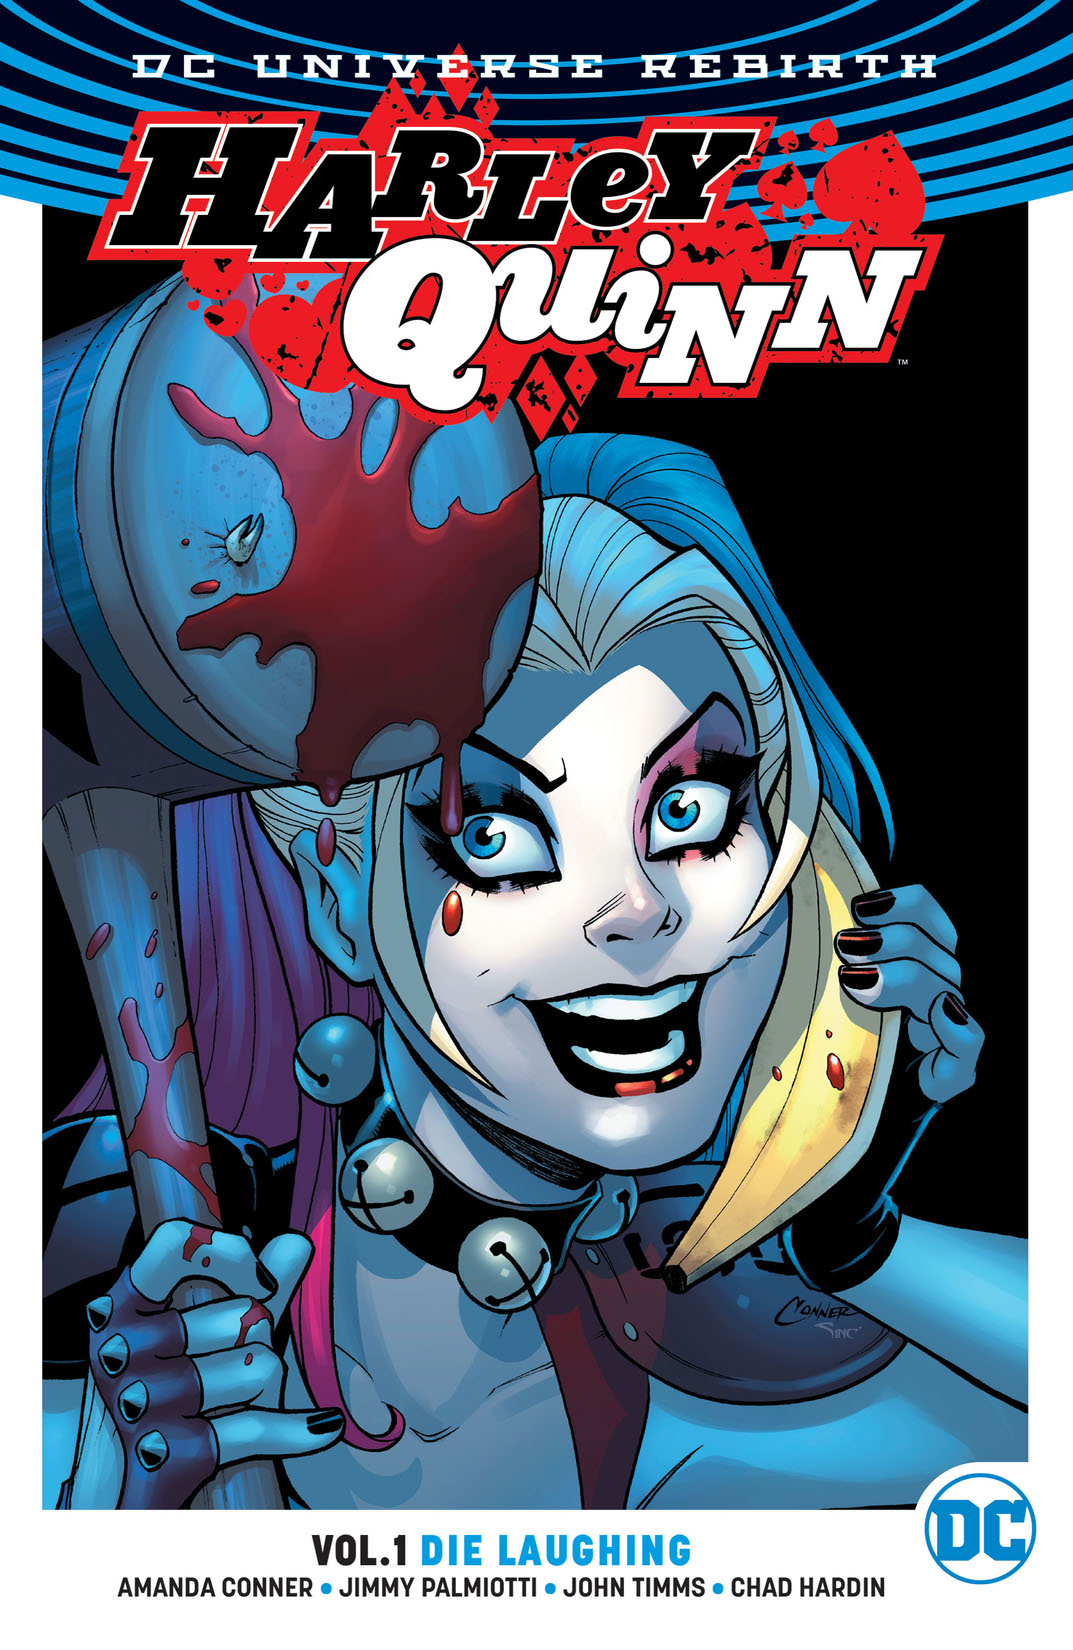 Harley Quinn Vol. 1: Die Laughing preview images